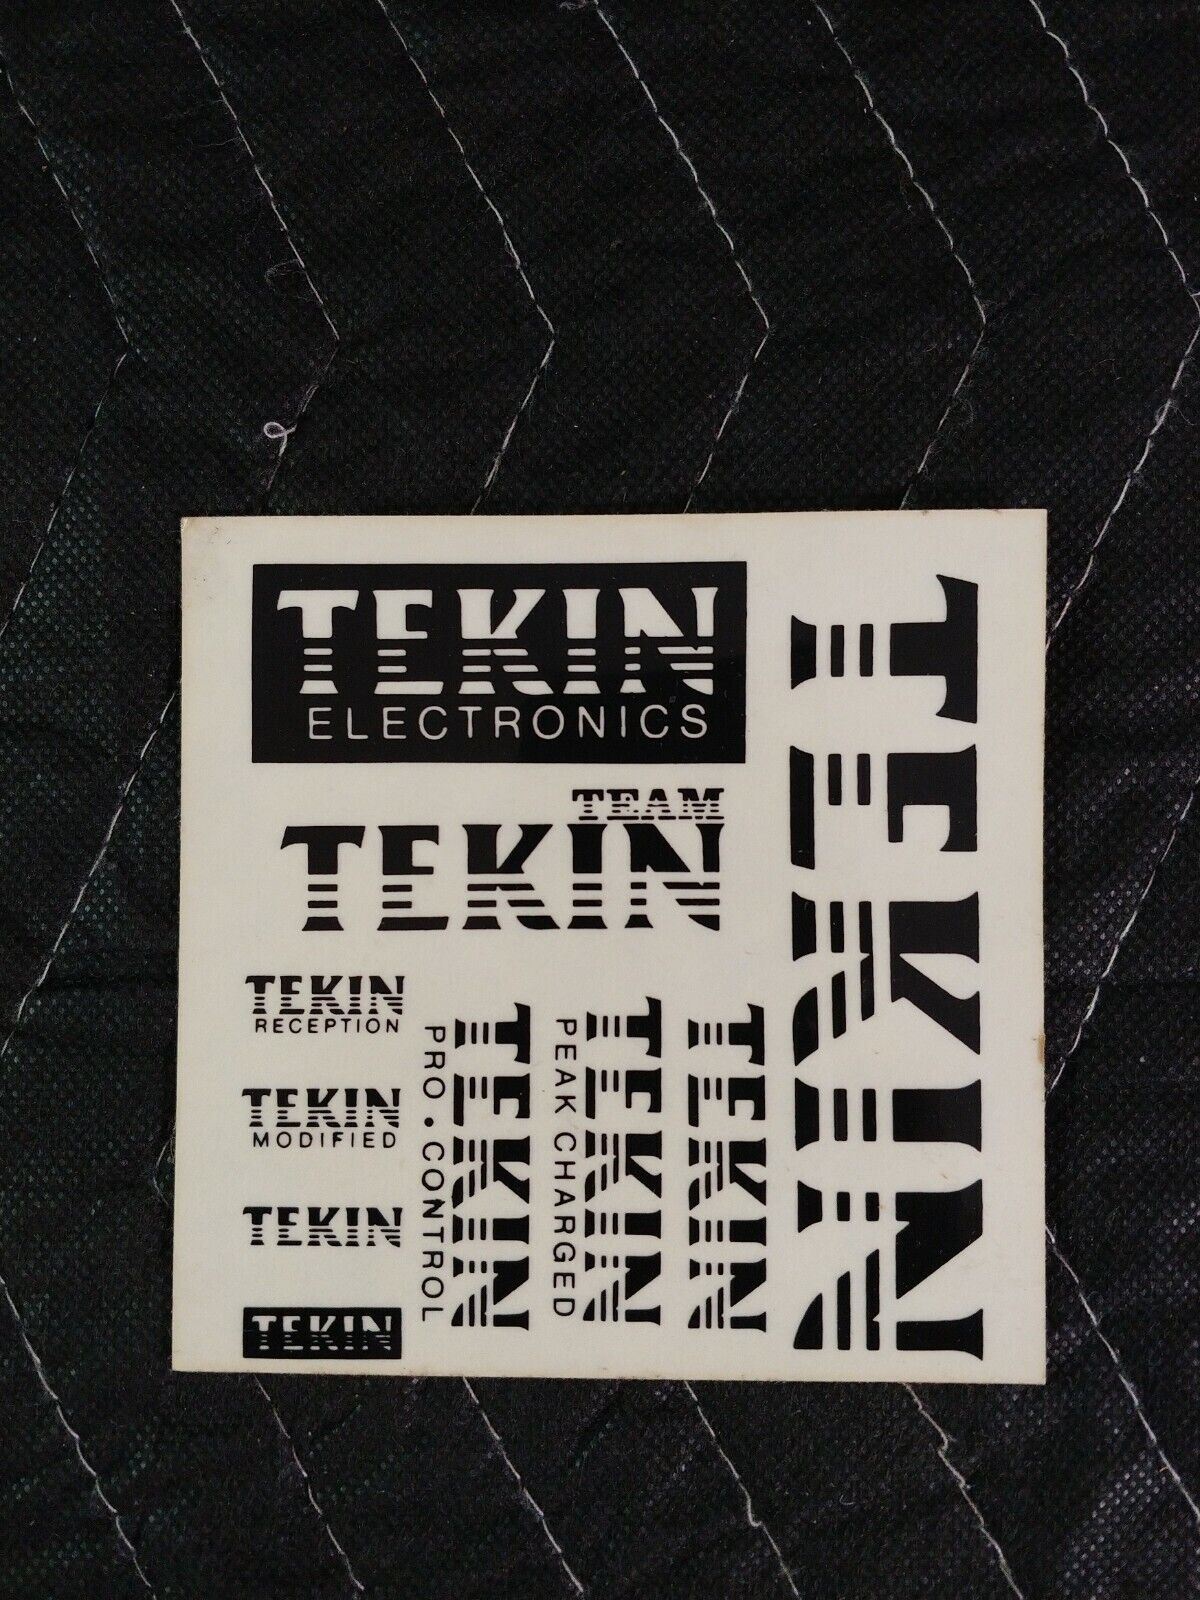 Tekin BC 870 Peak Detection Charger With Vintage Tekin Stickers